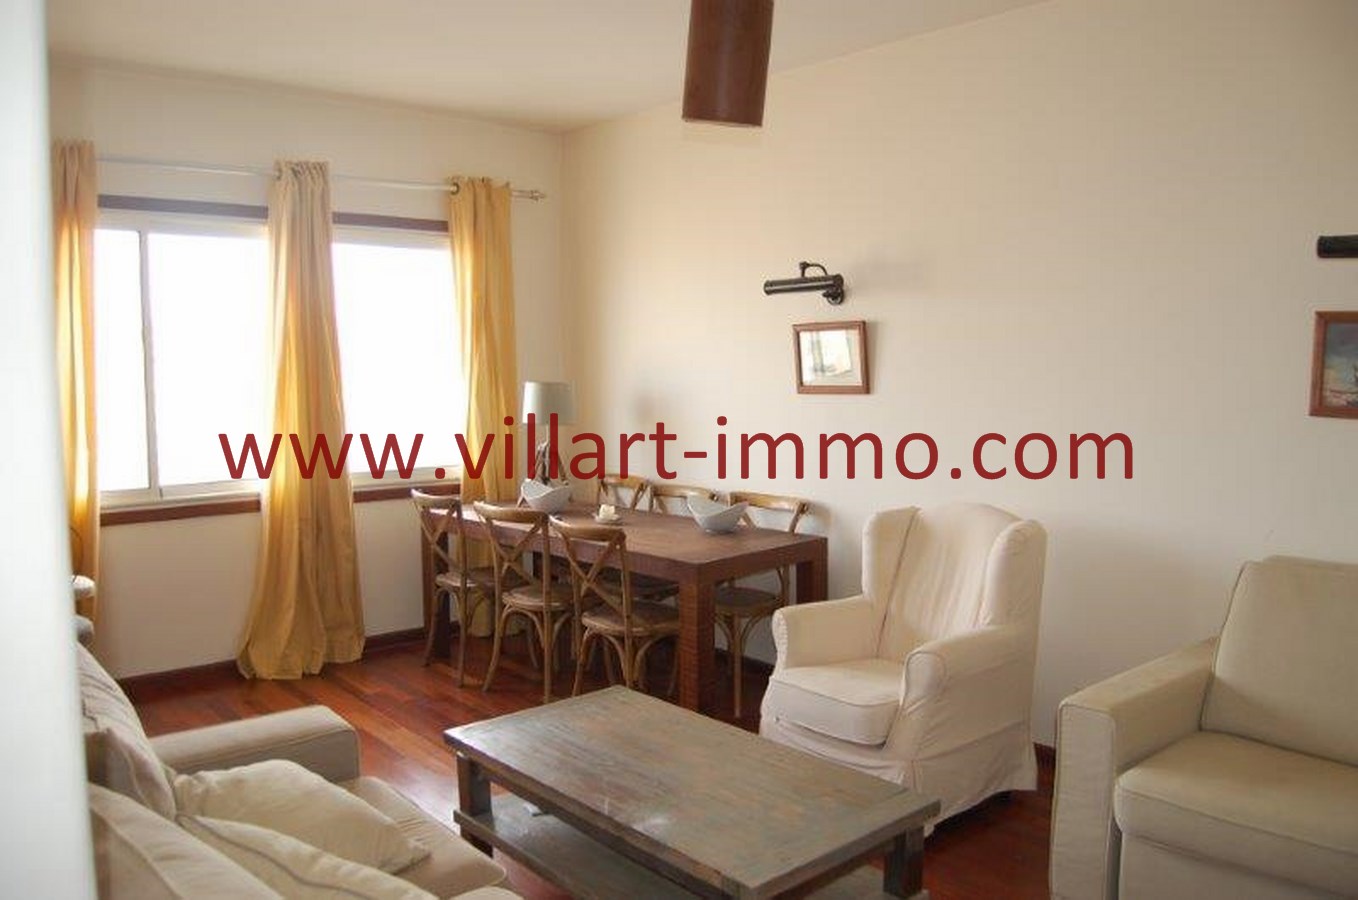 2-location-appartement-meuble-malabata-tanger-salon-l788-villart-immo